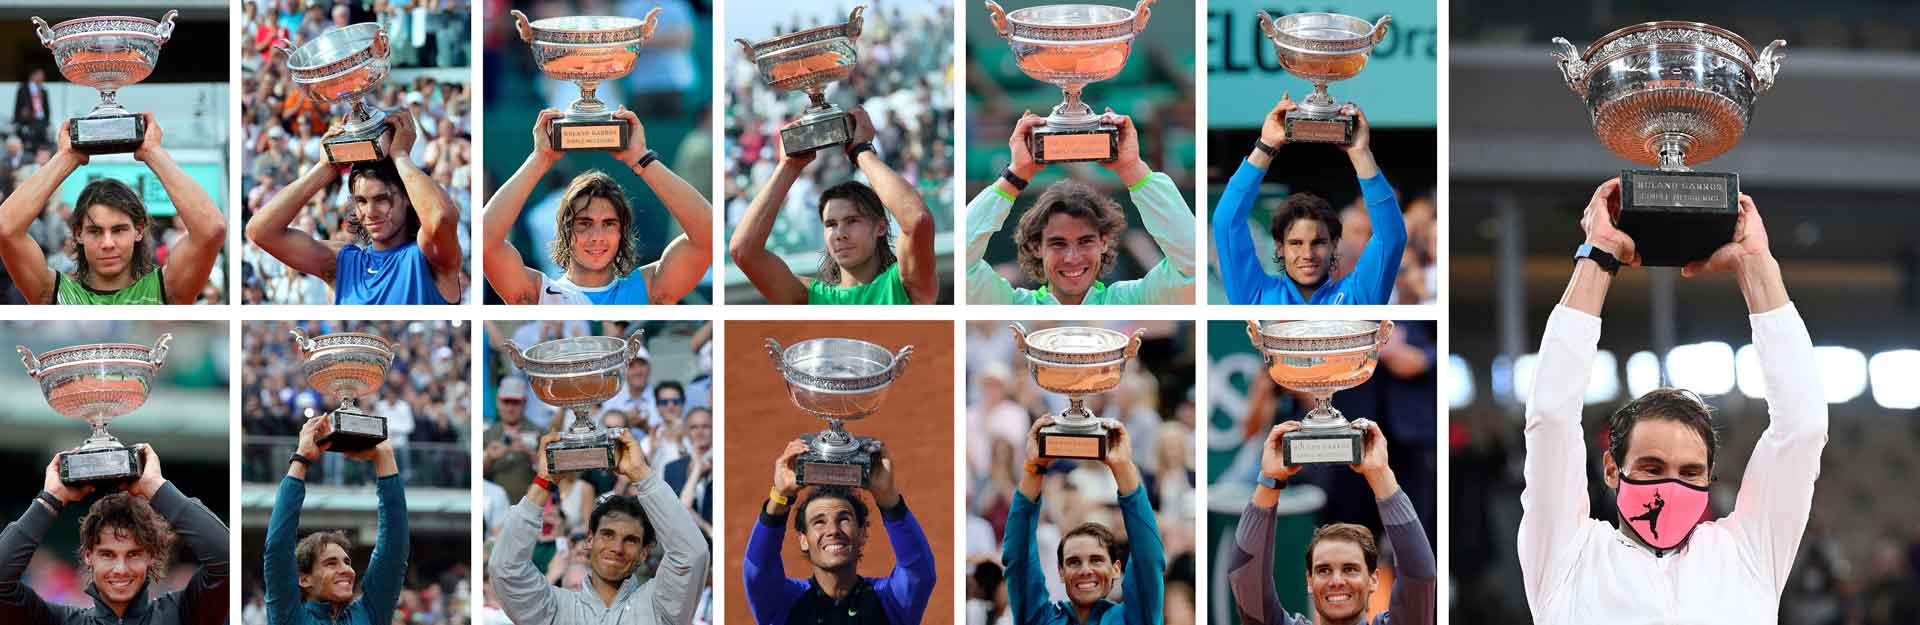 Populær Vægt antage Rafael Nadal Clinches Historic Win At Roland Garros | ATP Tour | Tennis